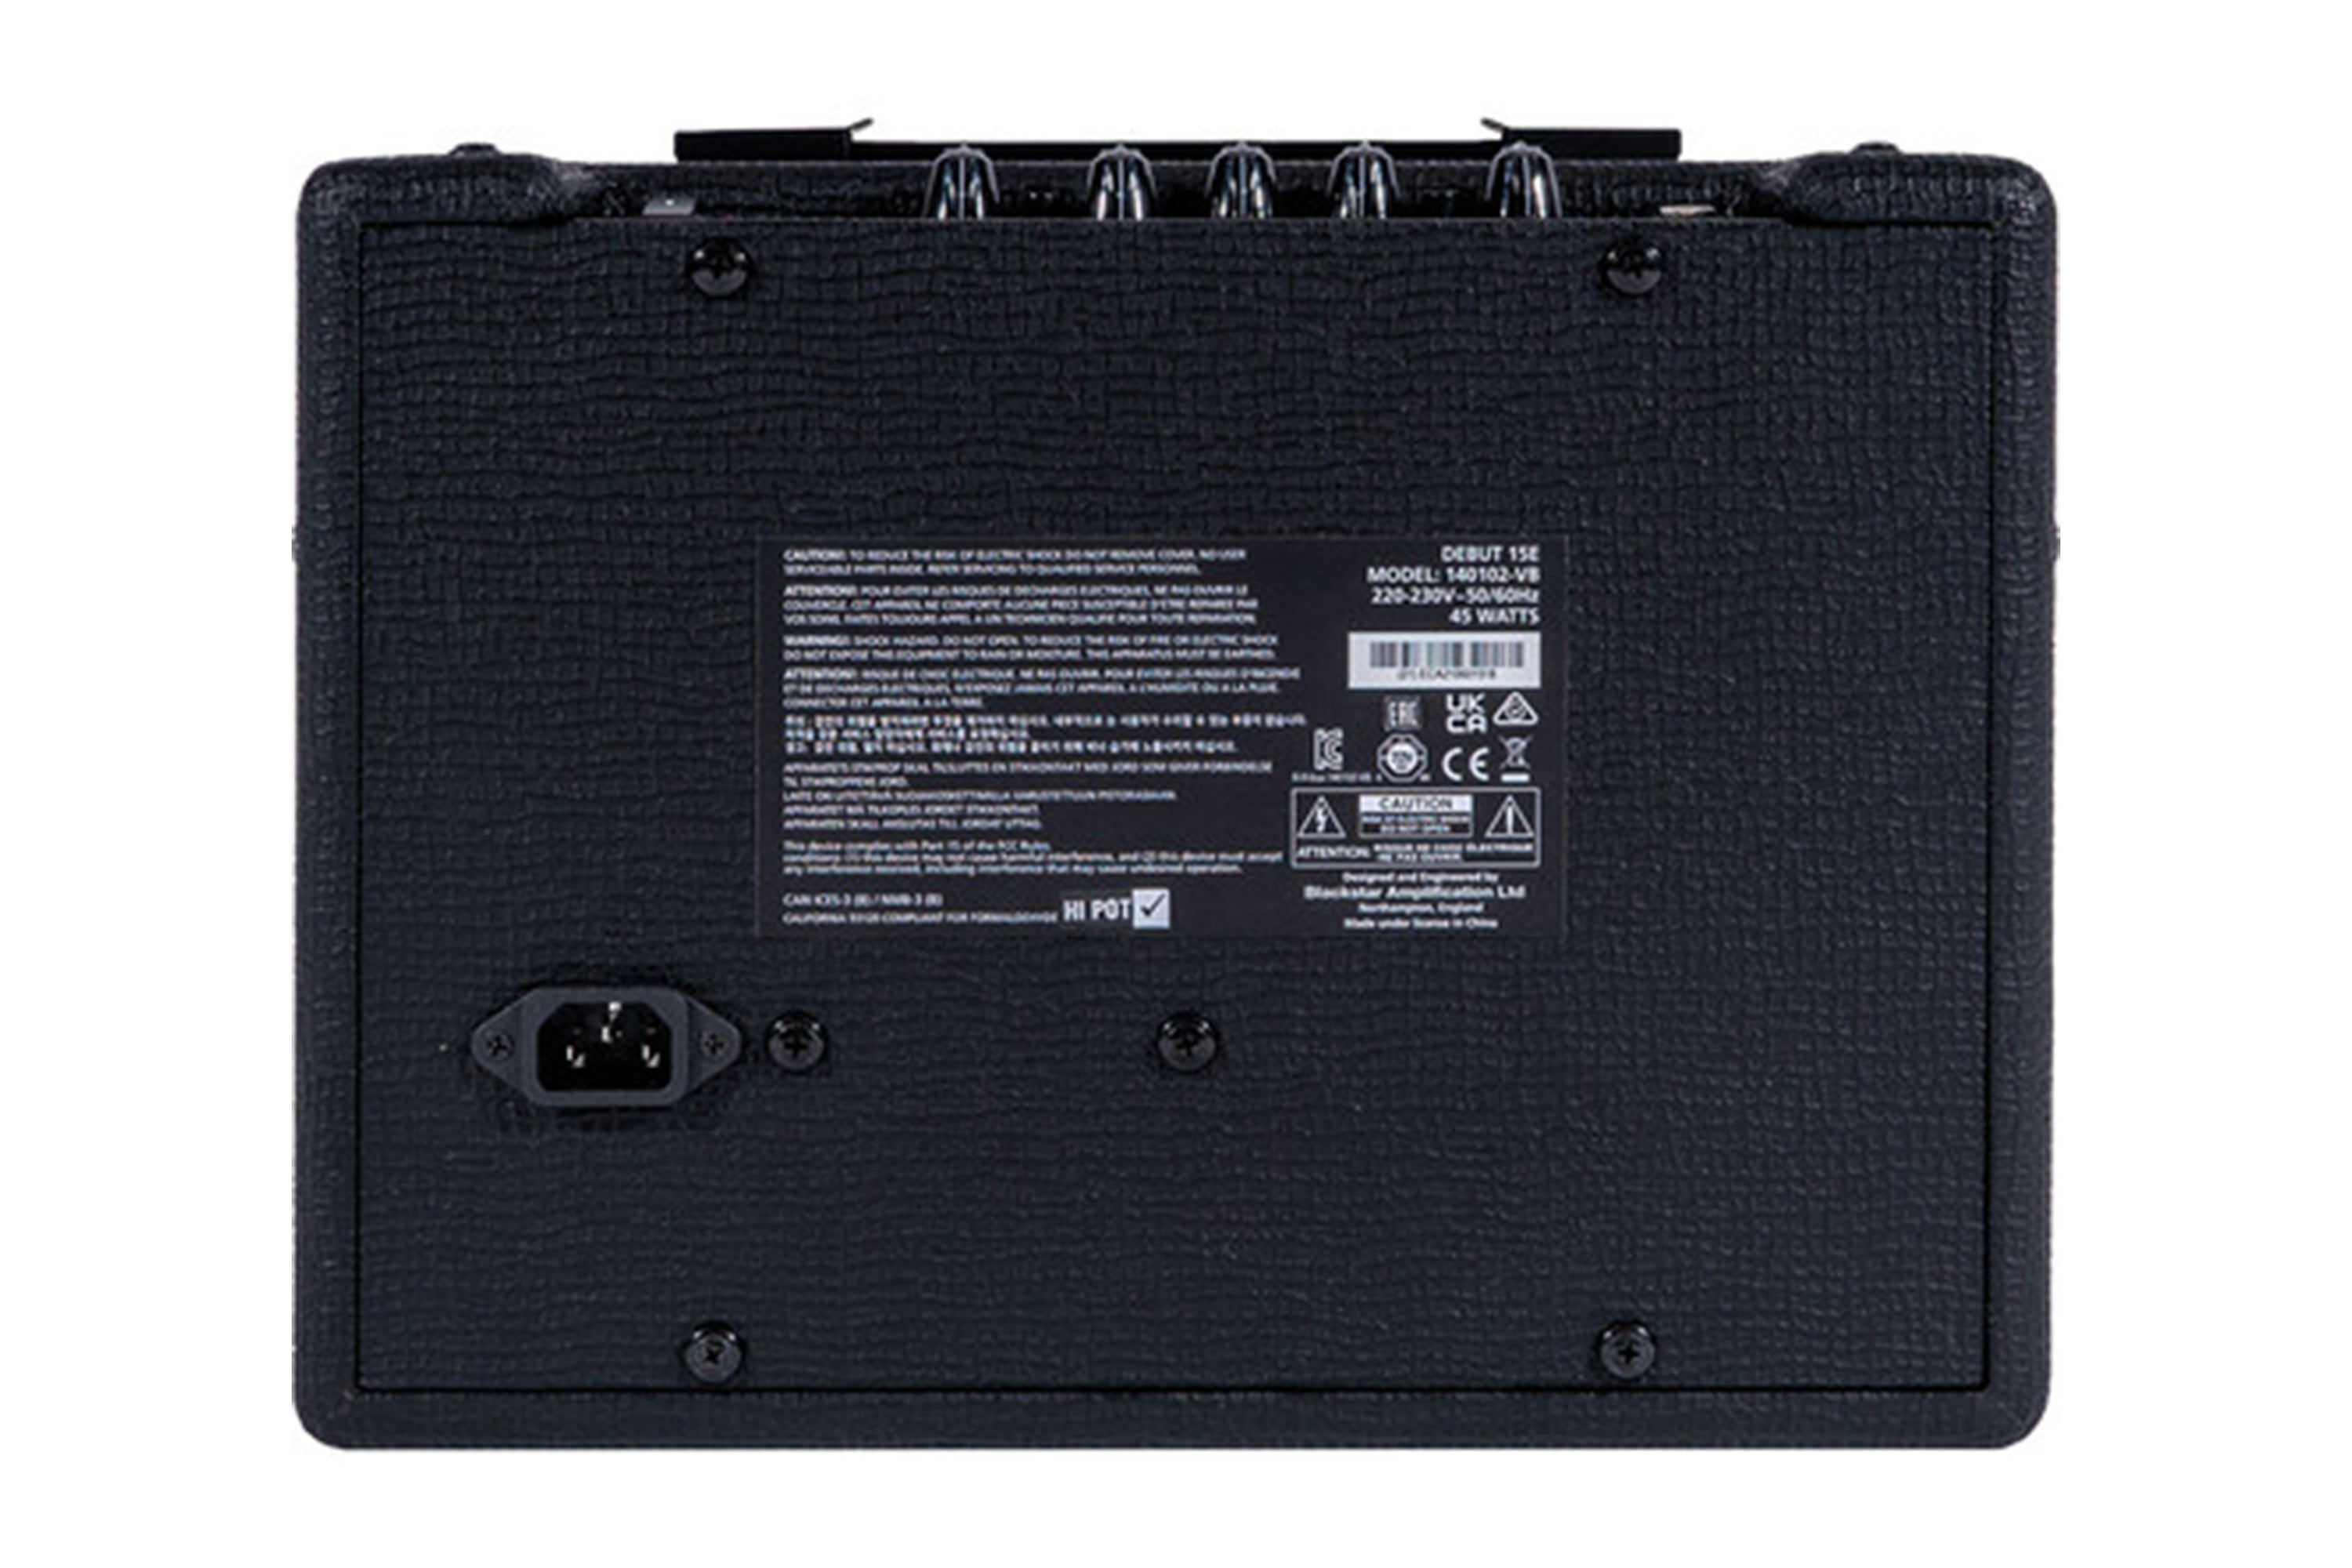 [OPEN BOX] Blackstar Debut 15E 15-Watt Combo Practice Amp with FX - Black